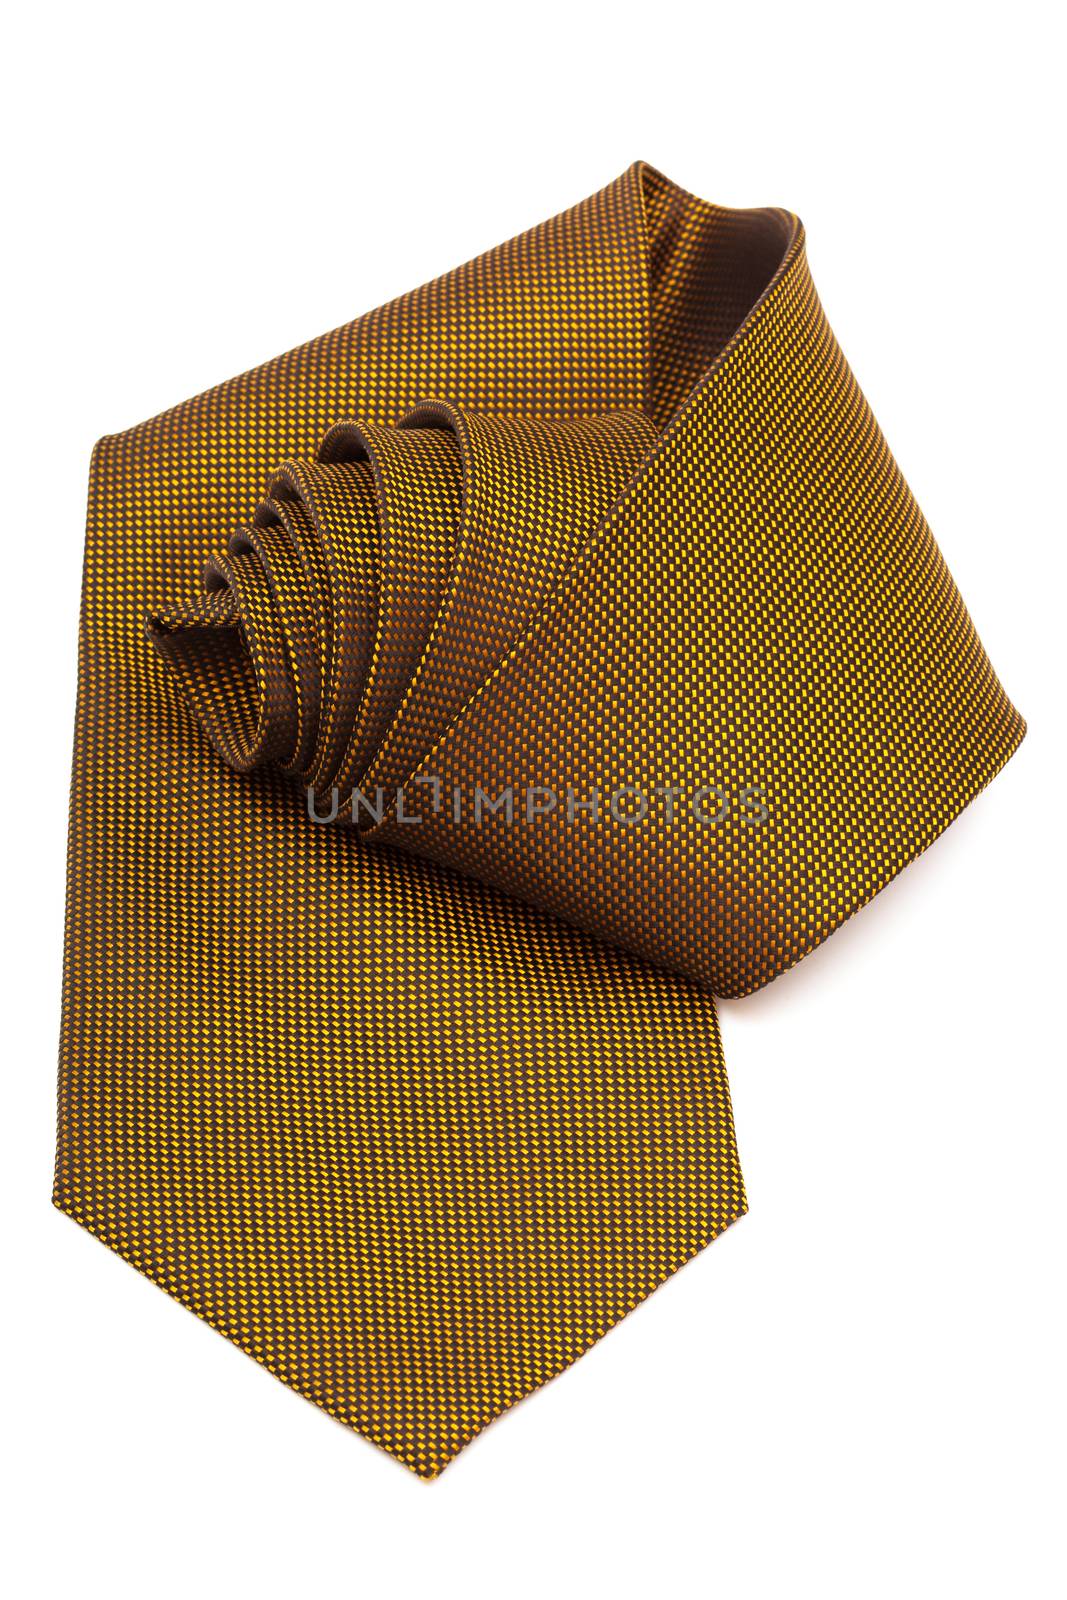 Fashionable yellow necktie on a white background